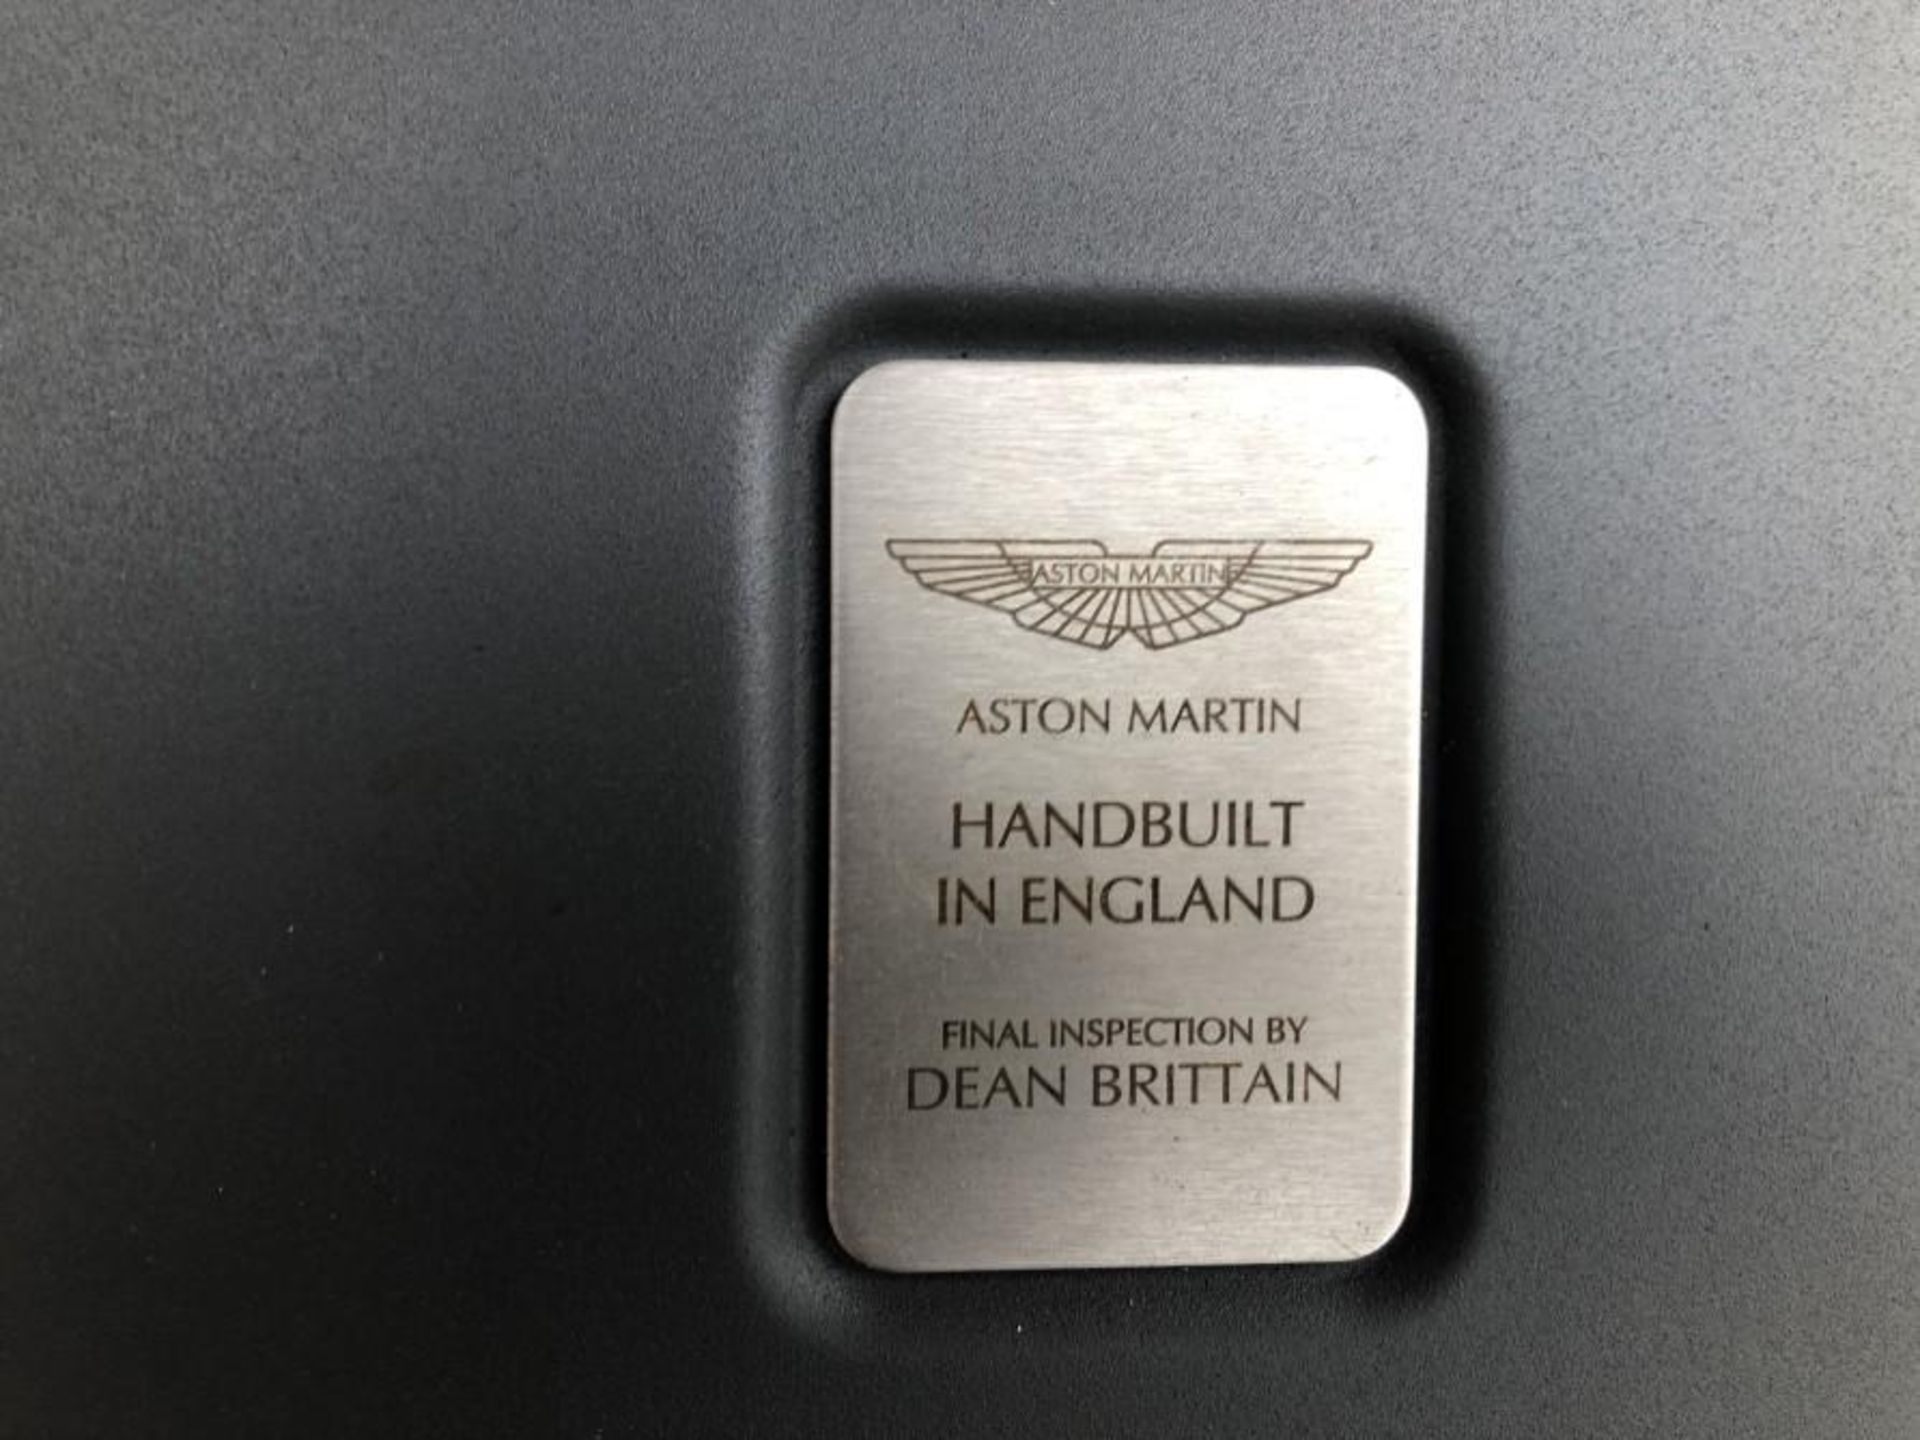 2008 Aston Martin Vantage Convertible, VIN SCFBF04B08GD08425, 4.3L V8, Auto, RWD, Keyless Entry, - Image 15 of 15